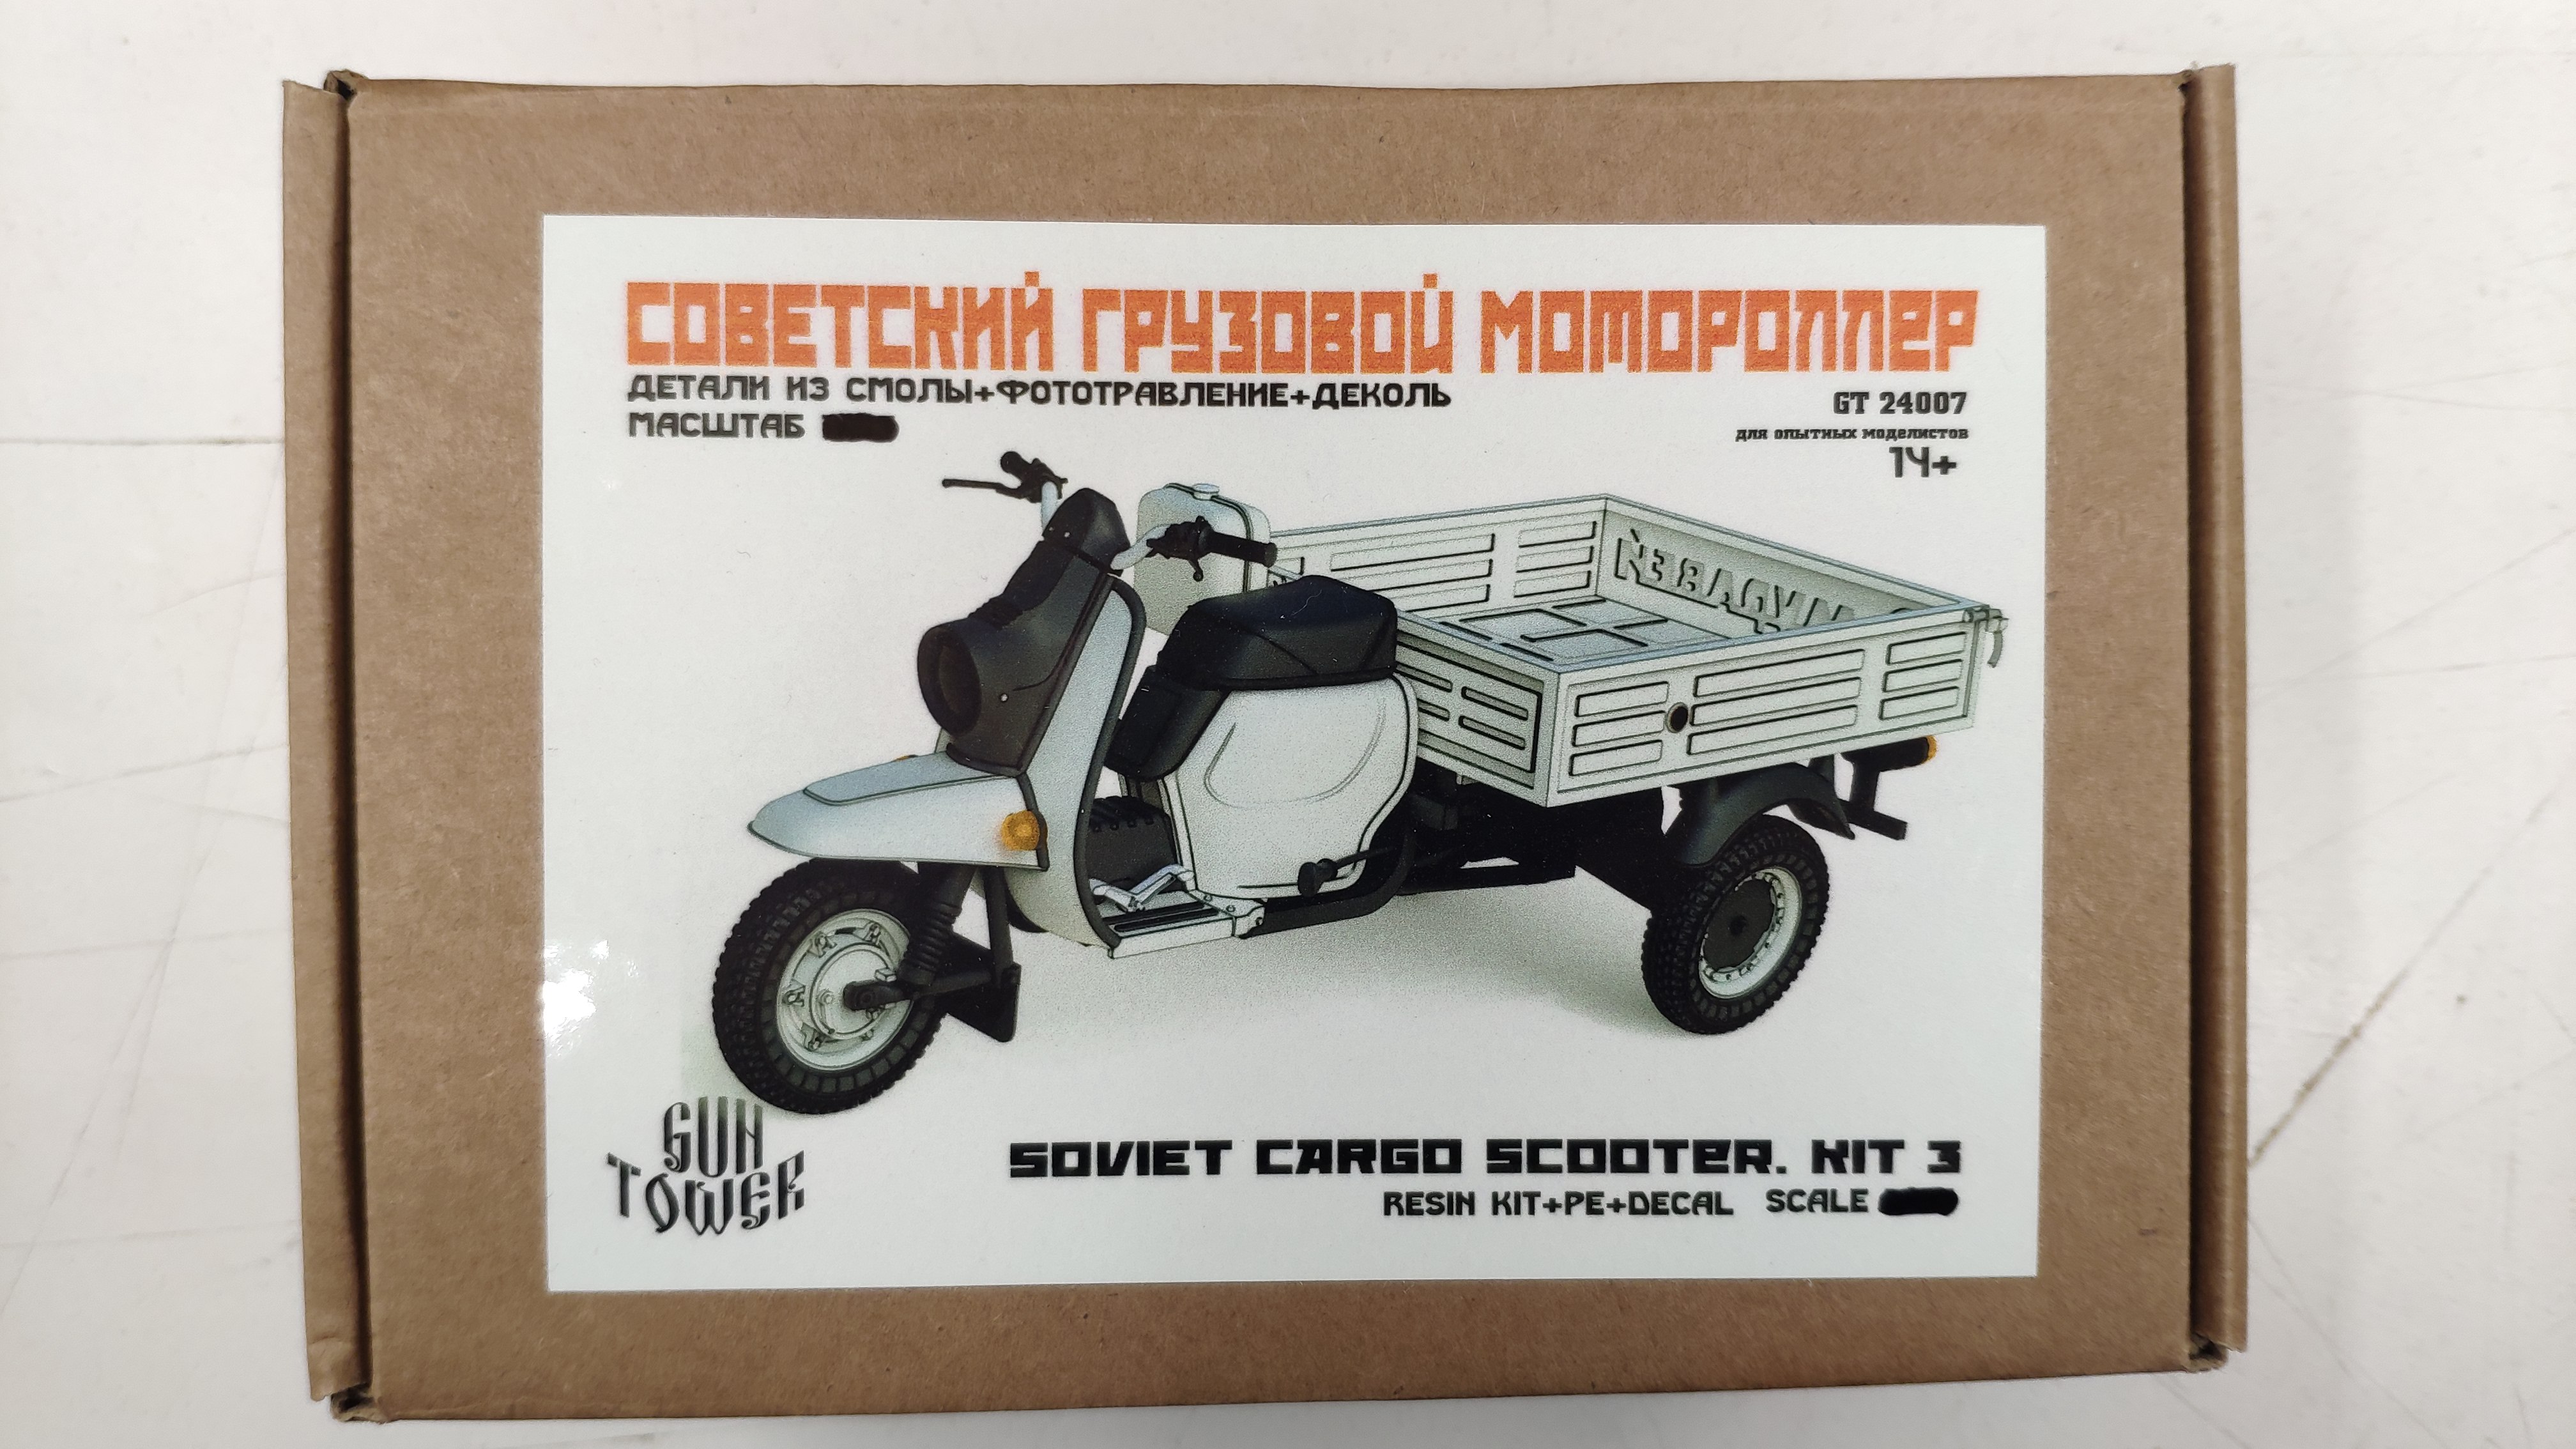 GT 24007 Советский грузовой мотороллер